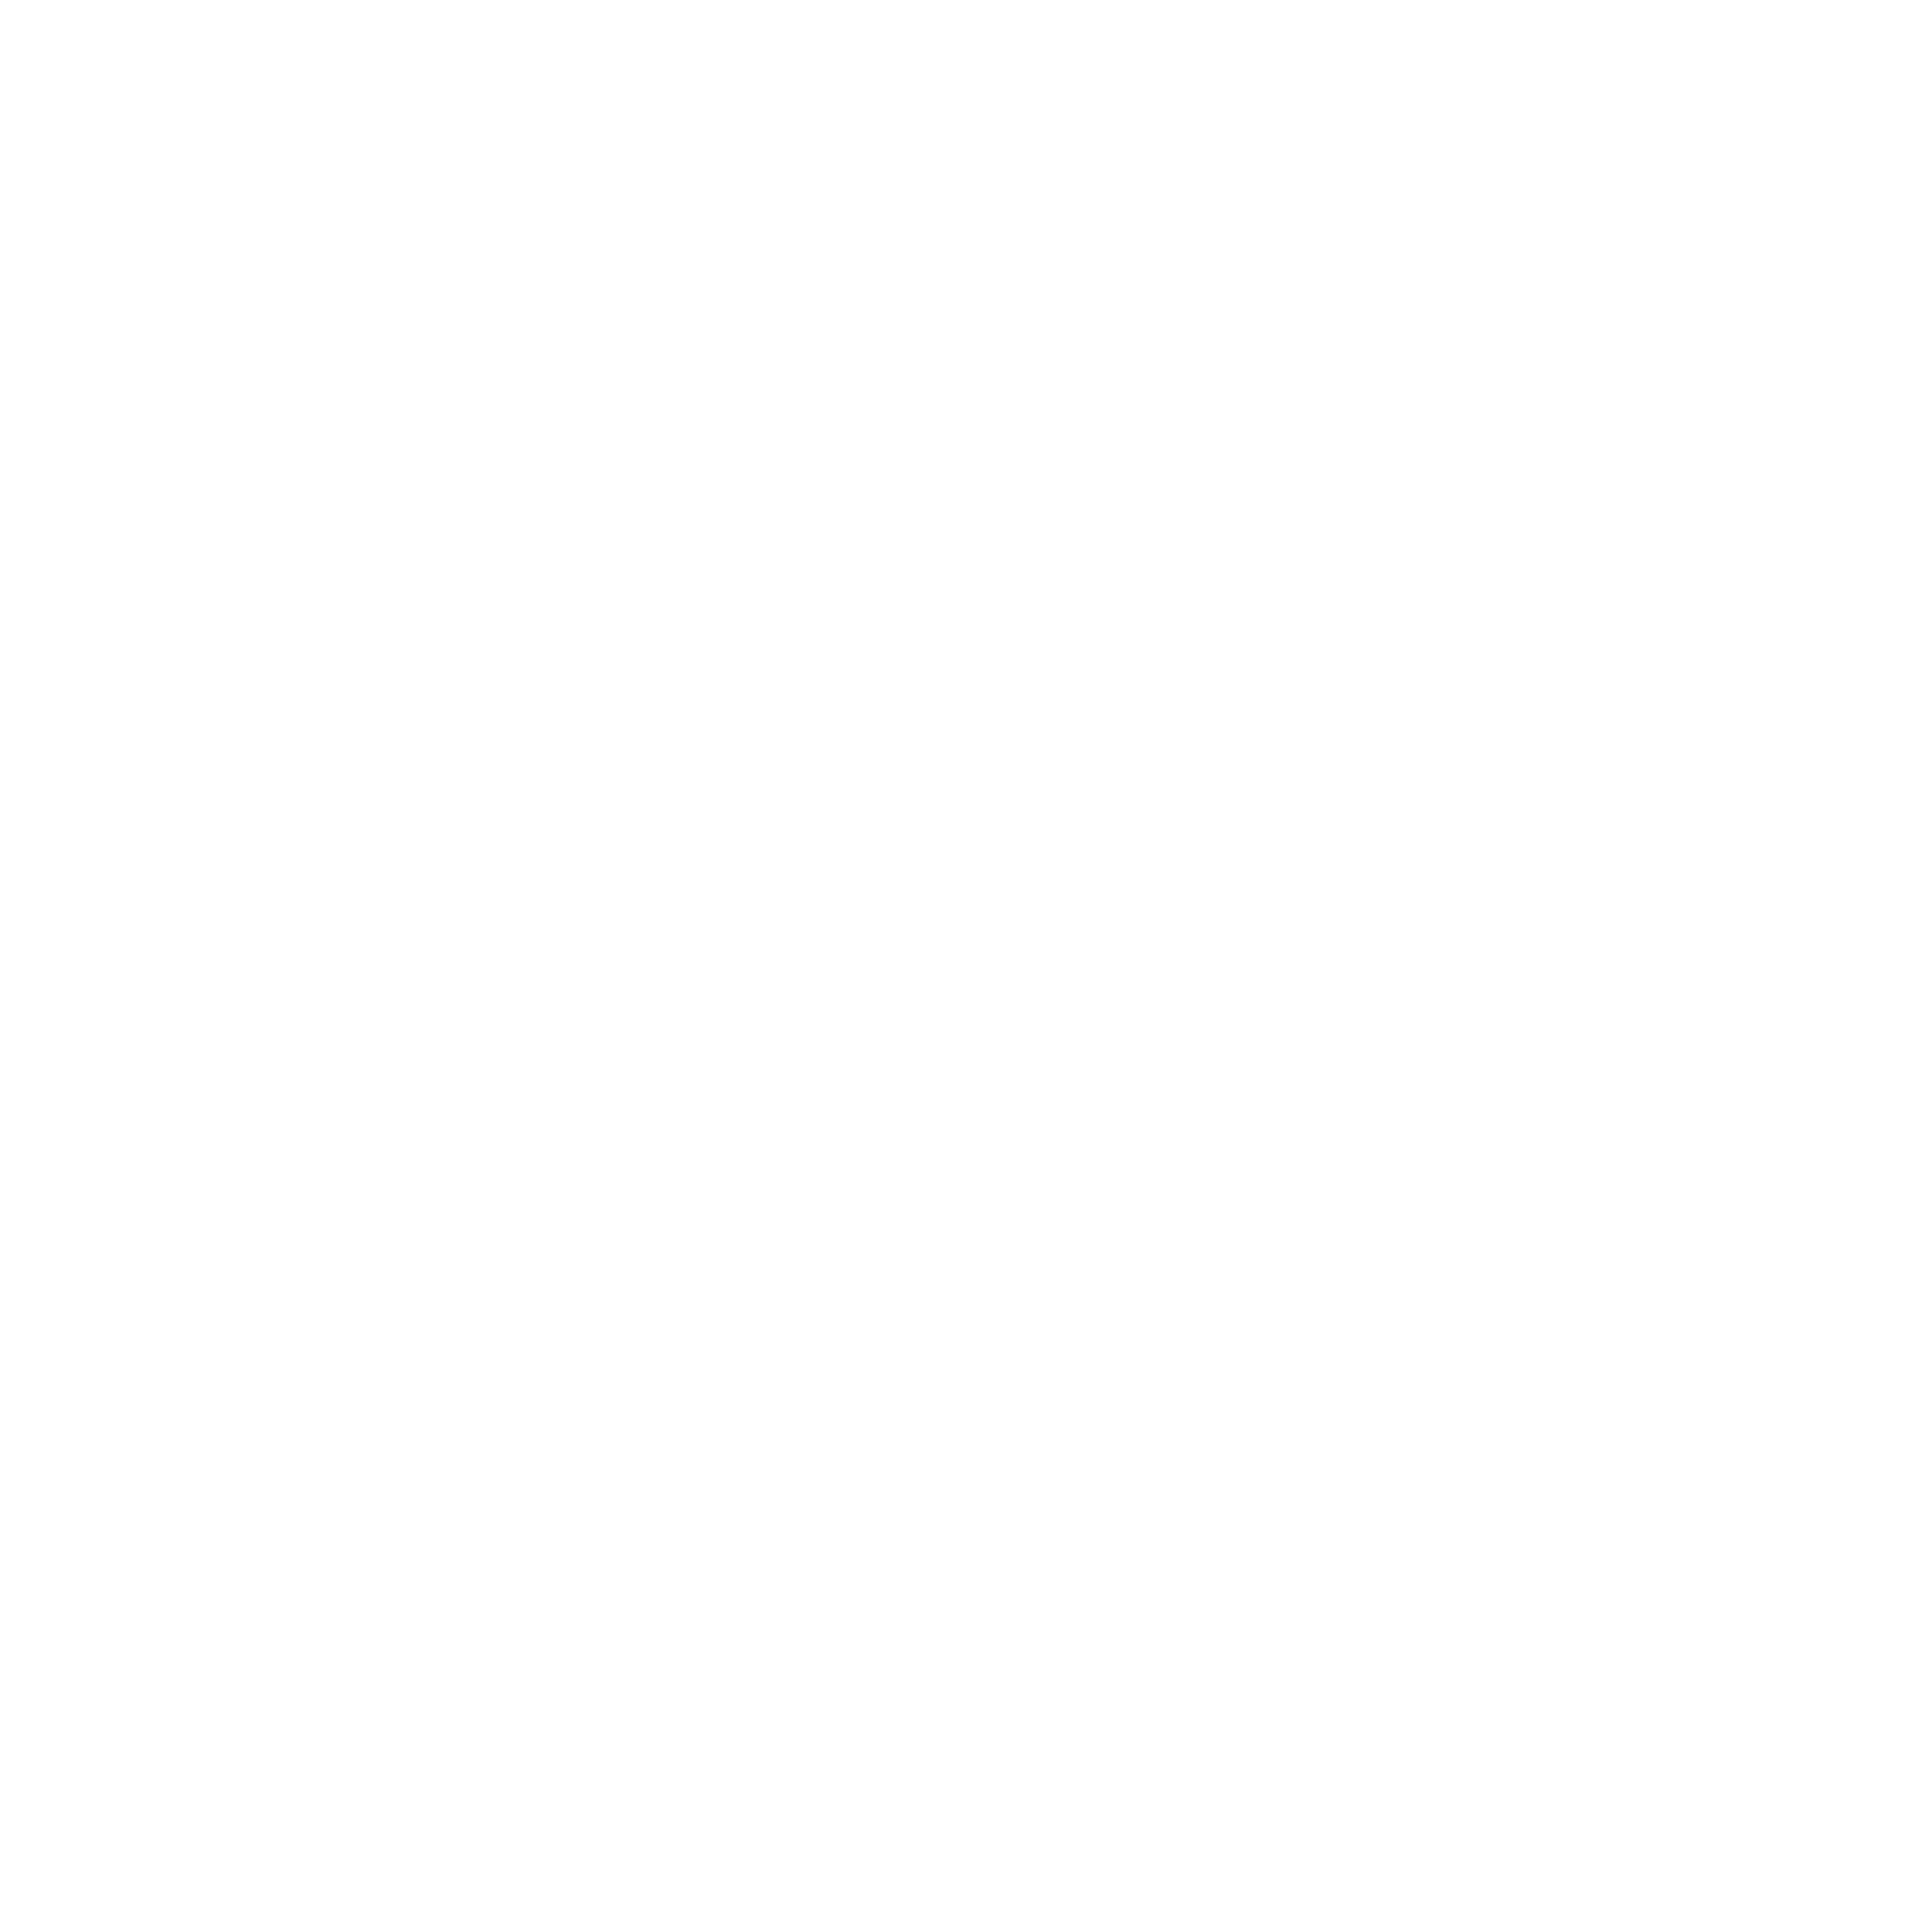 Inside the Firm podcast logo